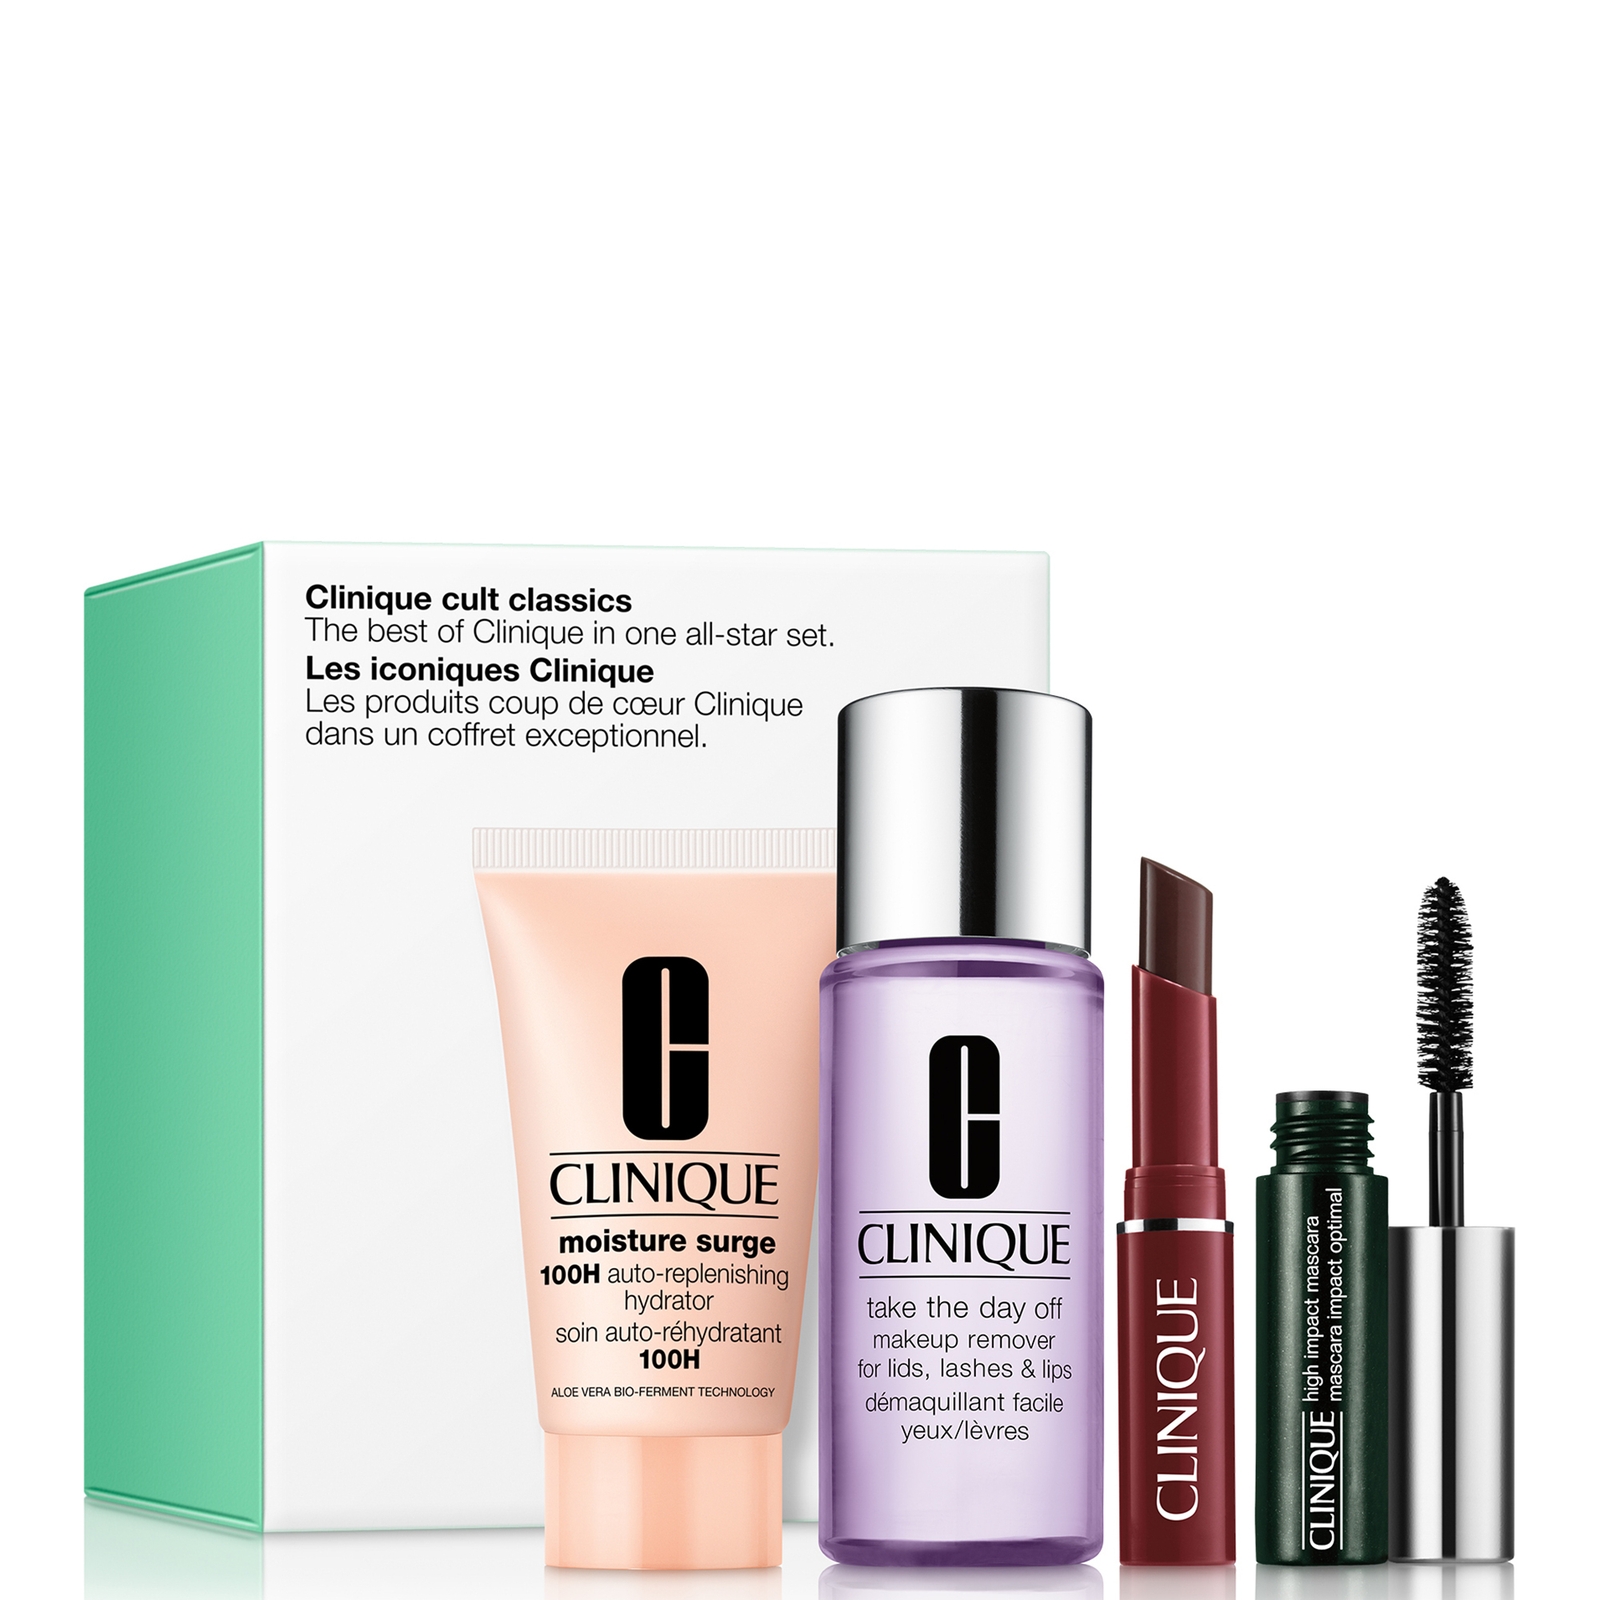 Clinique Cult Classics Skincare and Makeup Gift Set